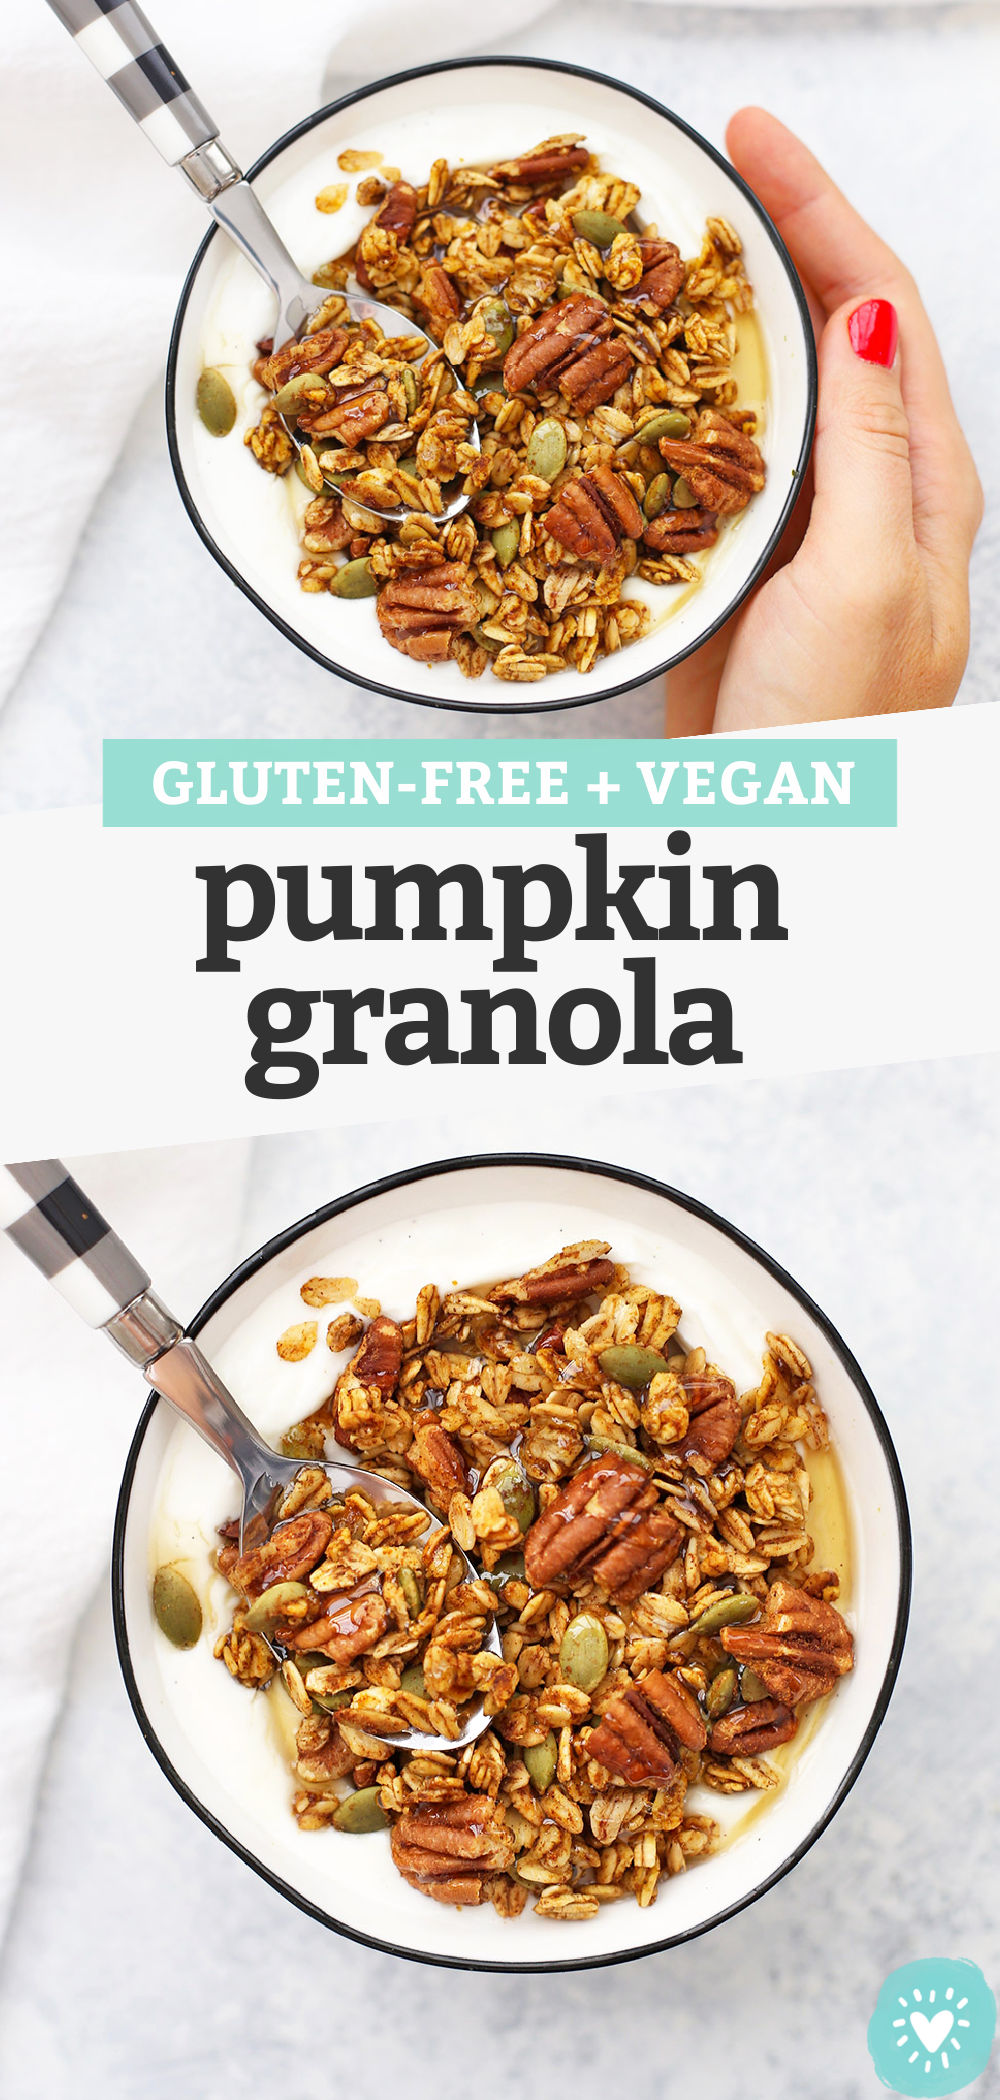 Collage of images of gluten free pumpkin granola with text overlay that reads "Gluten-Free + Vegan Pumpkin Granola"